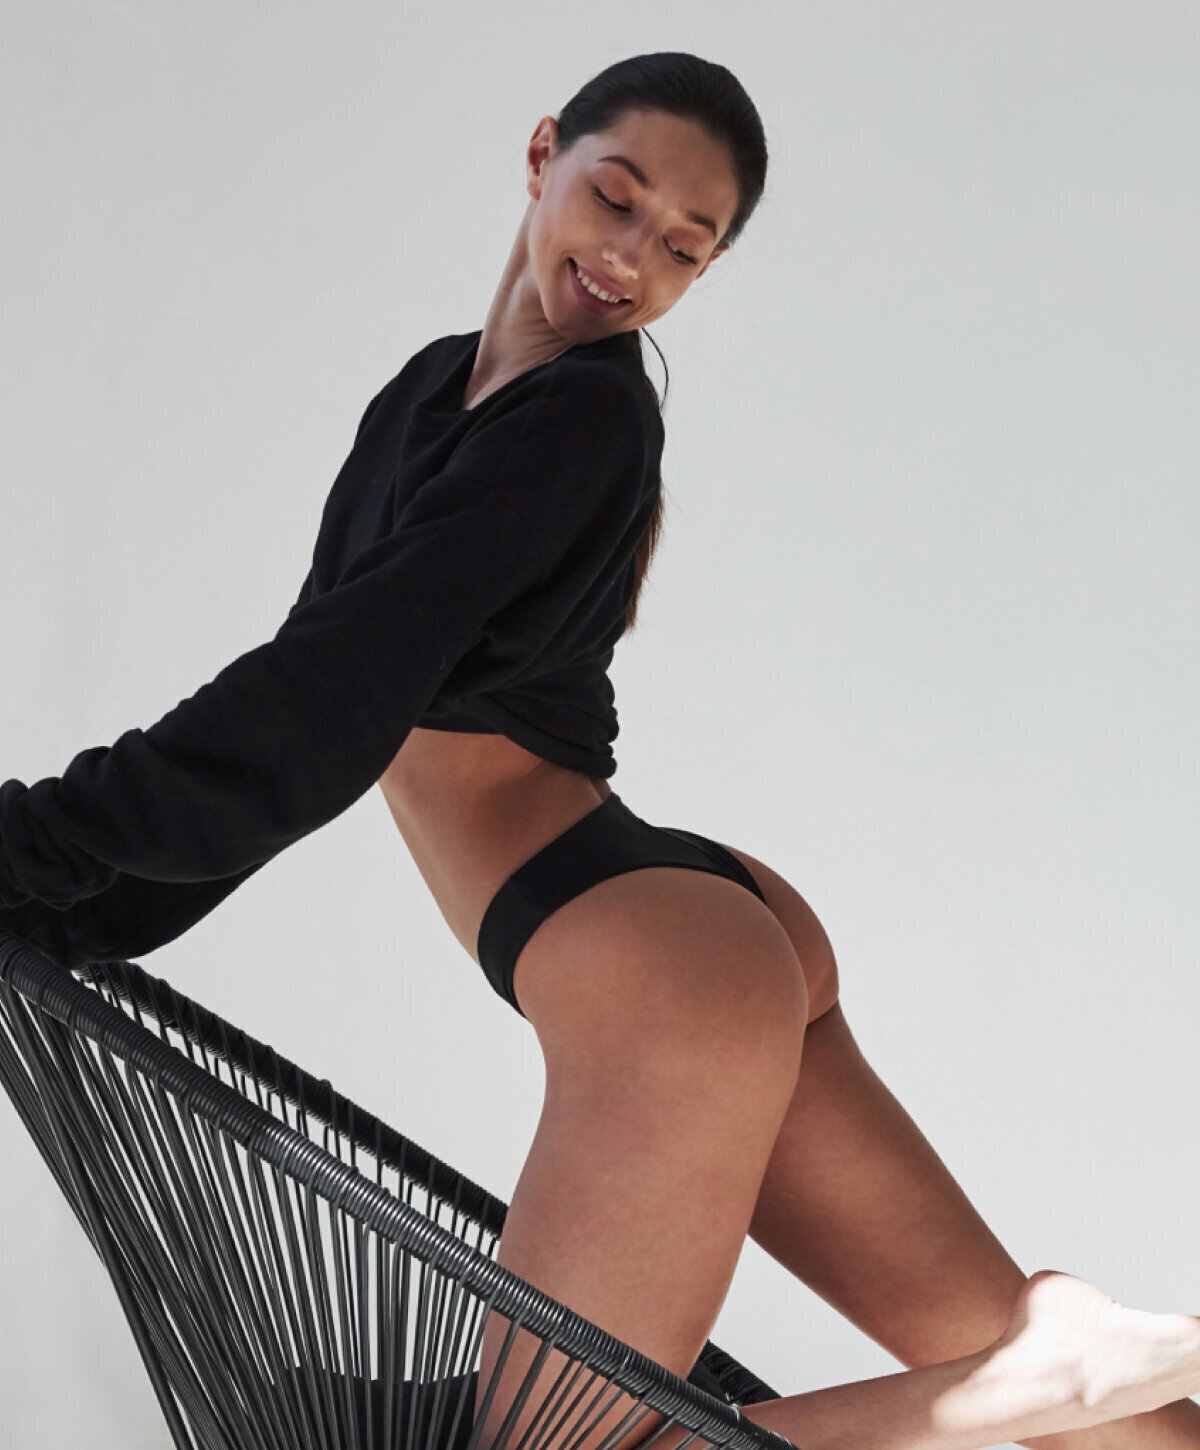 dallas thigh lift model in black top